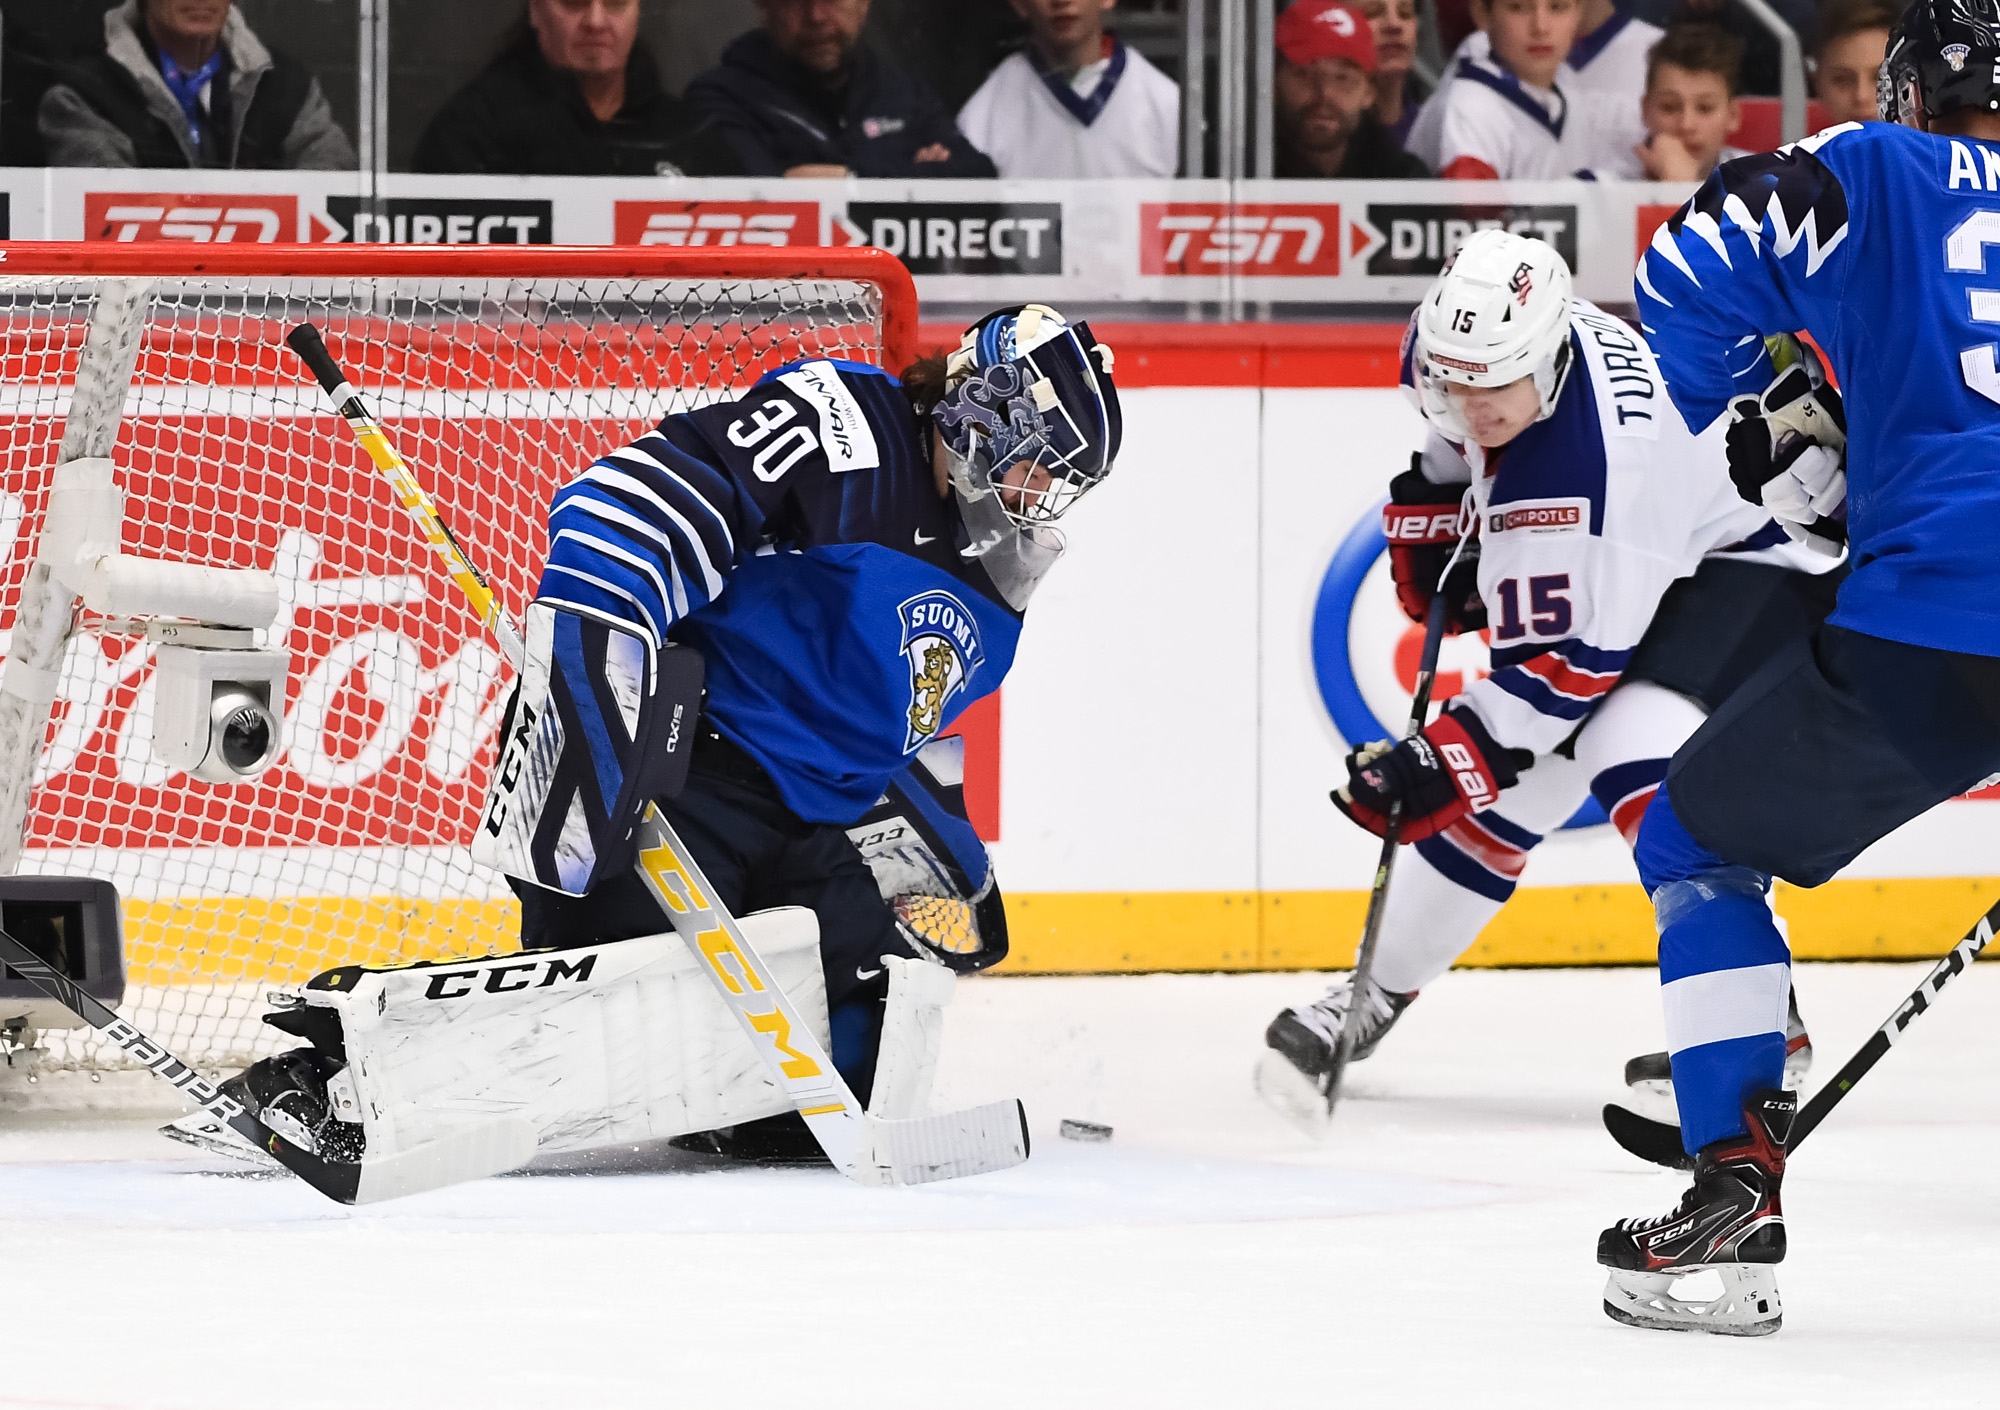 IIHF - Gallery: USA vs. Finland (QF) - 2020 IIHF World Junior Championship